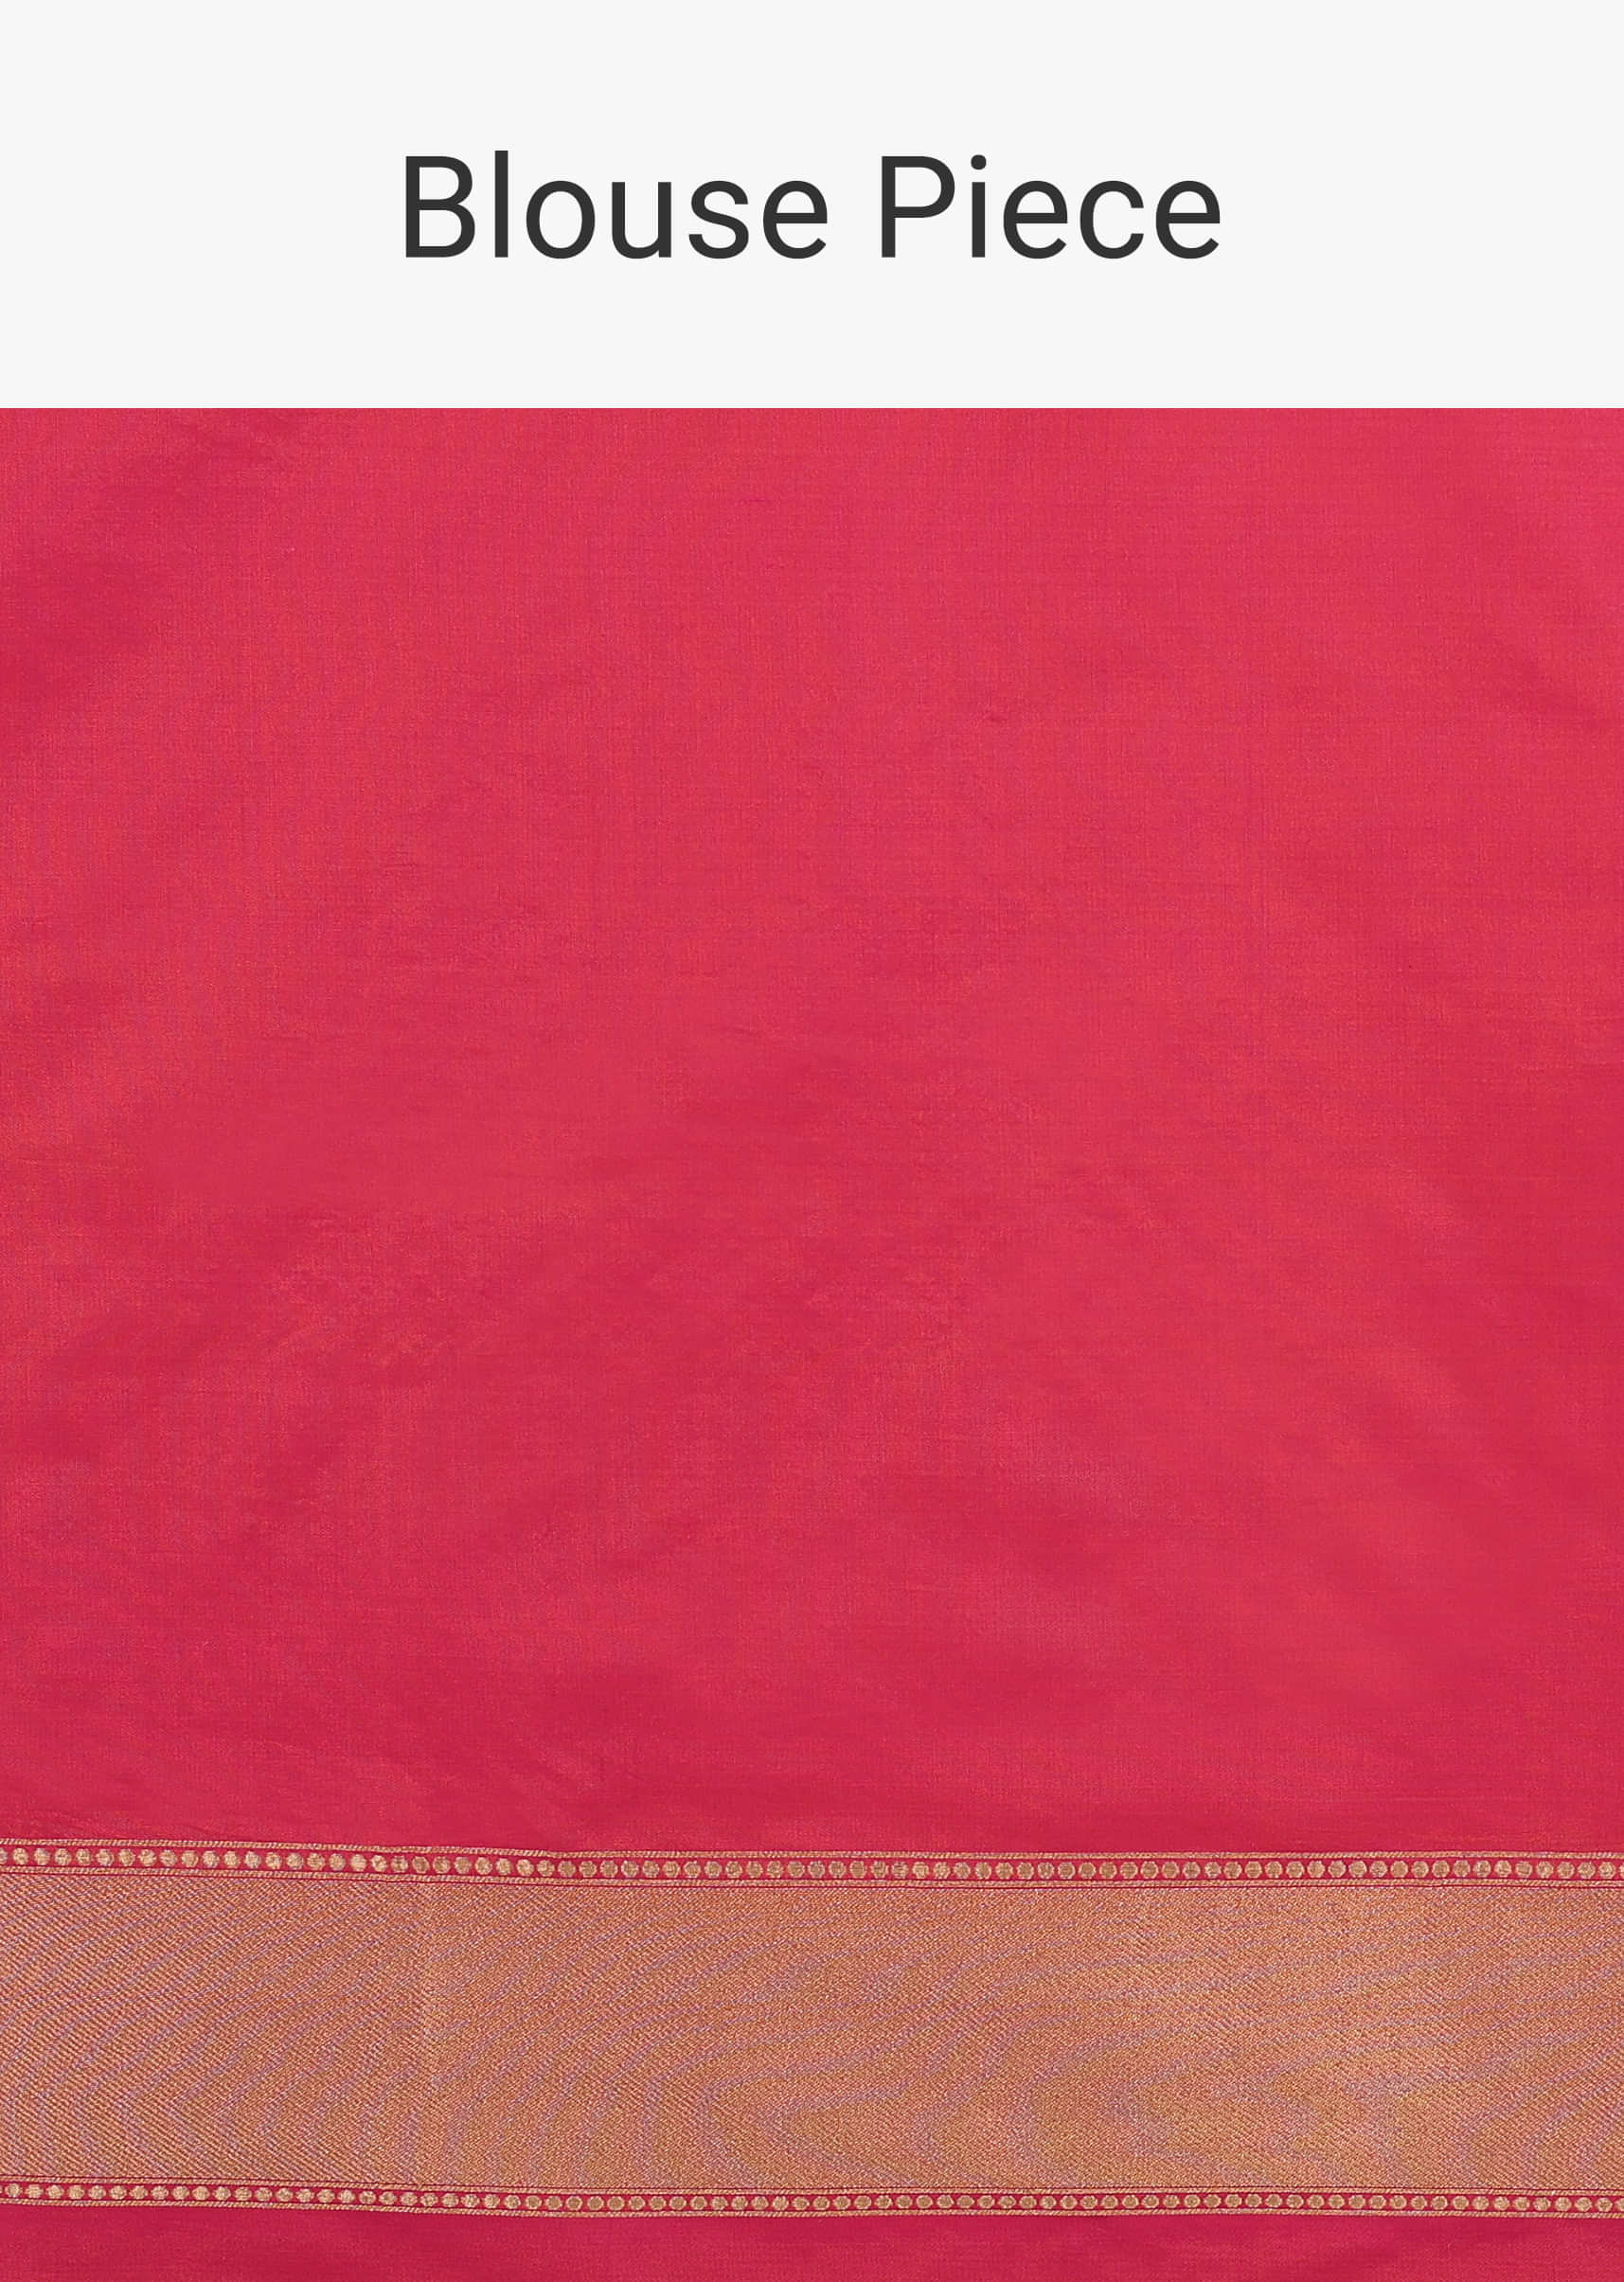 Cherry Pink Saree In Pure Banarasi Silk With An Orange Luminous Shade And Upada Zari Weave Floral Jaal Work